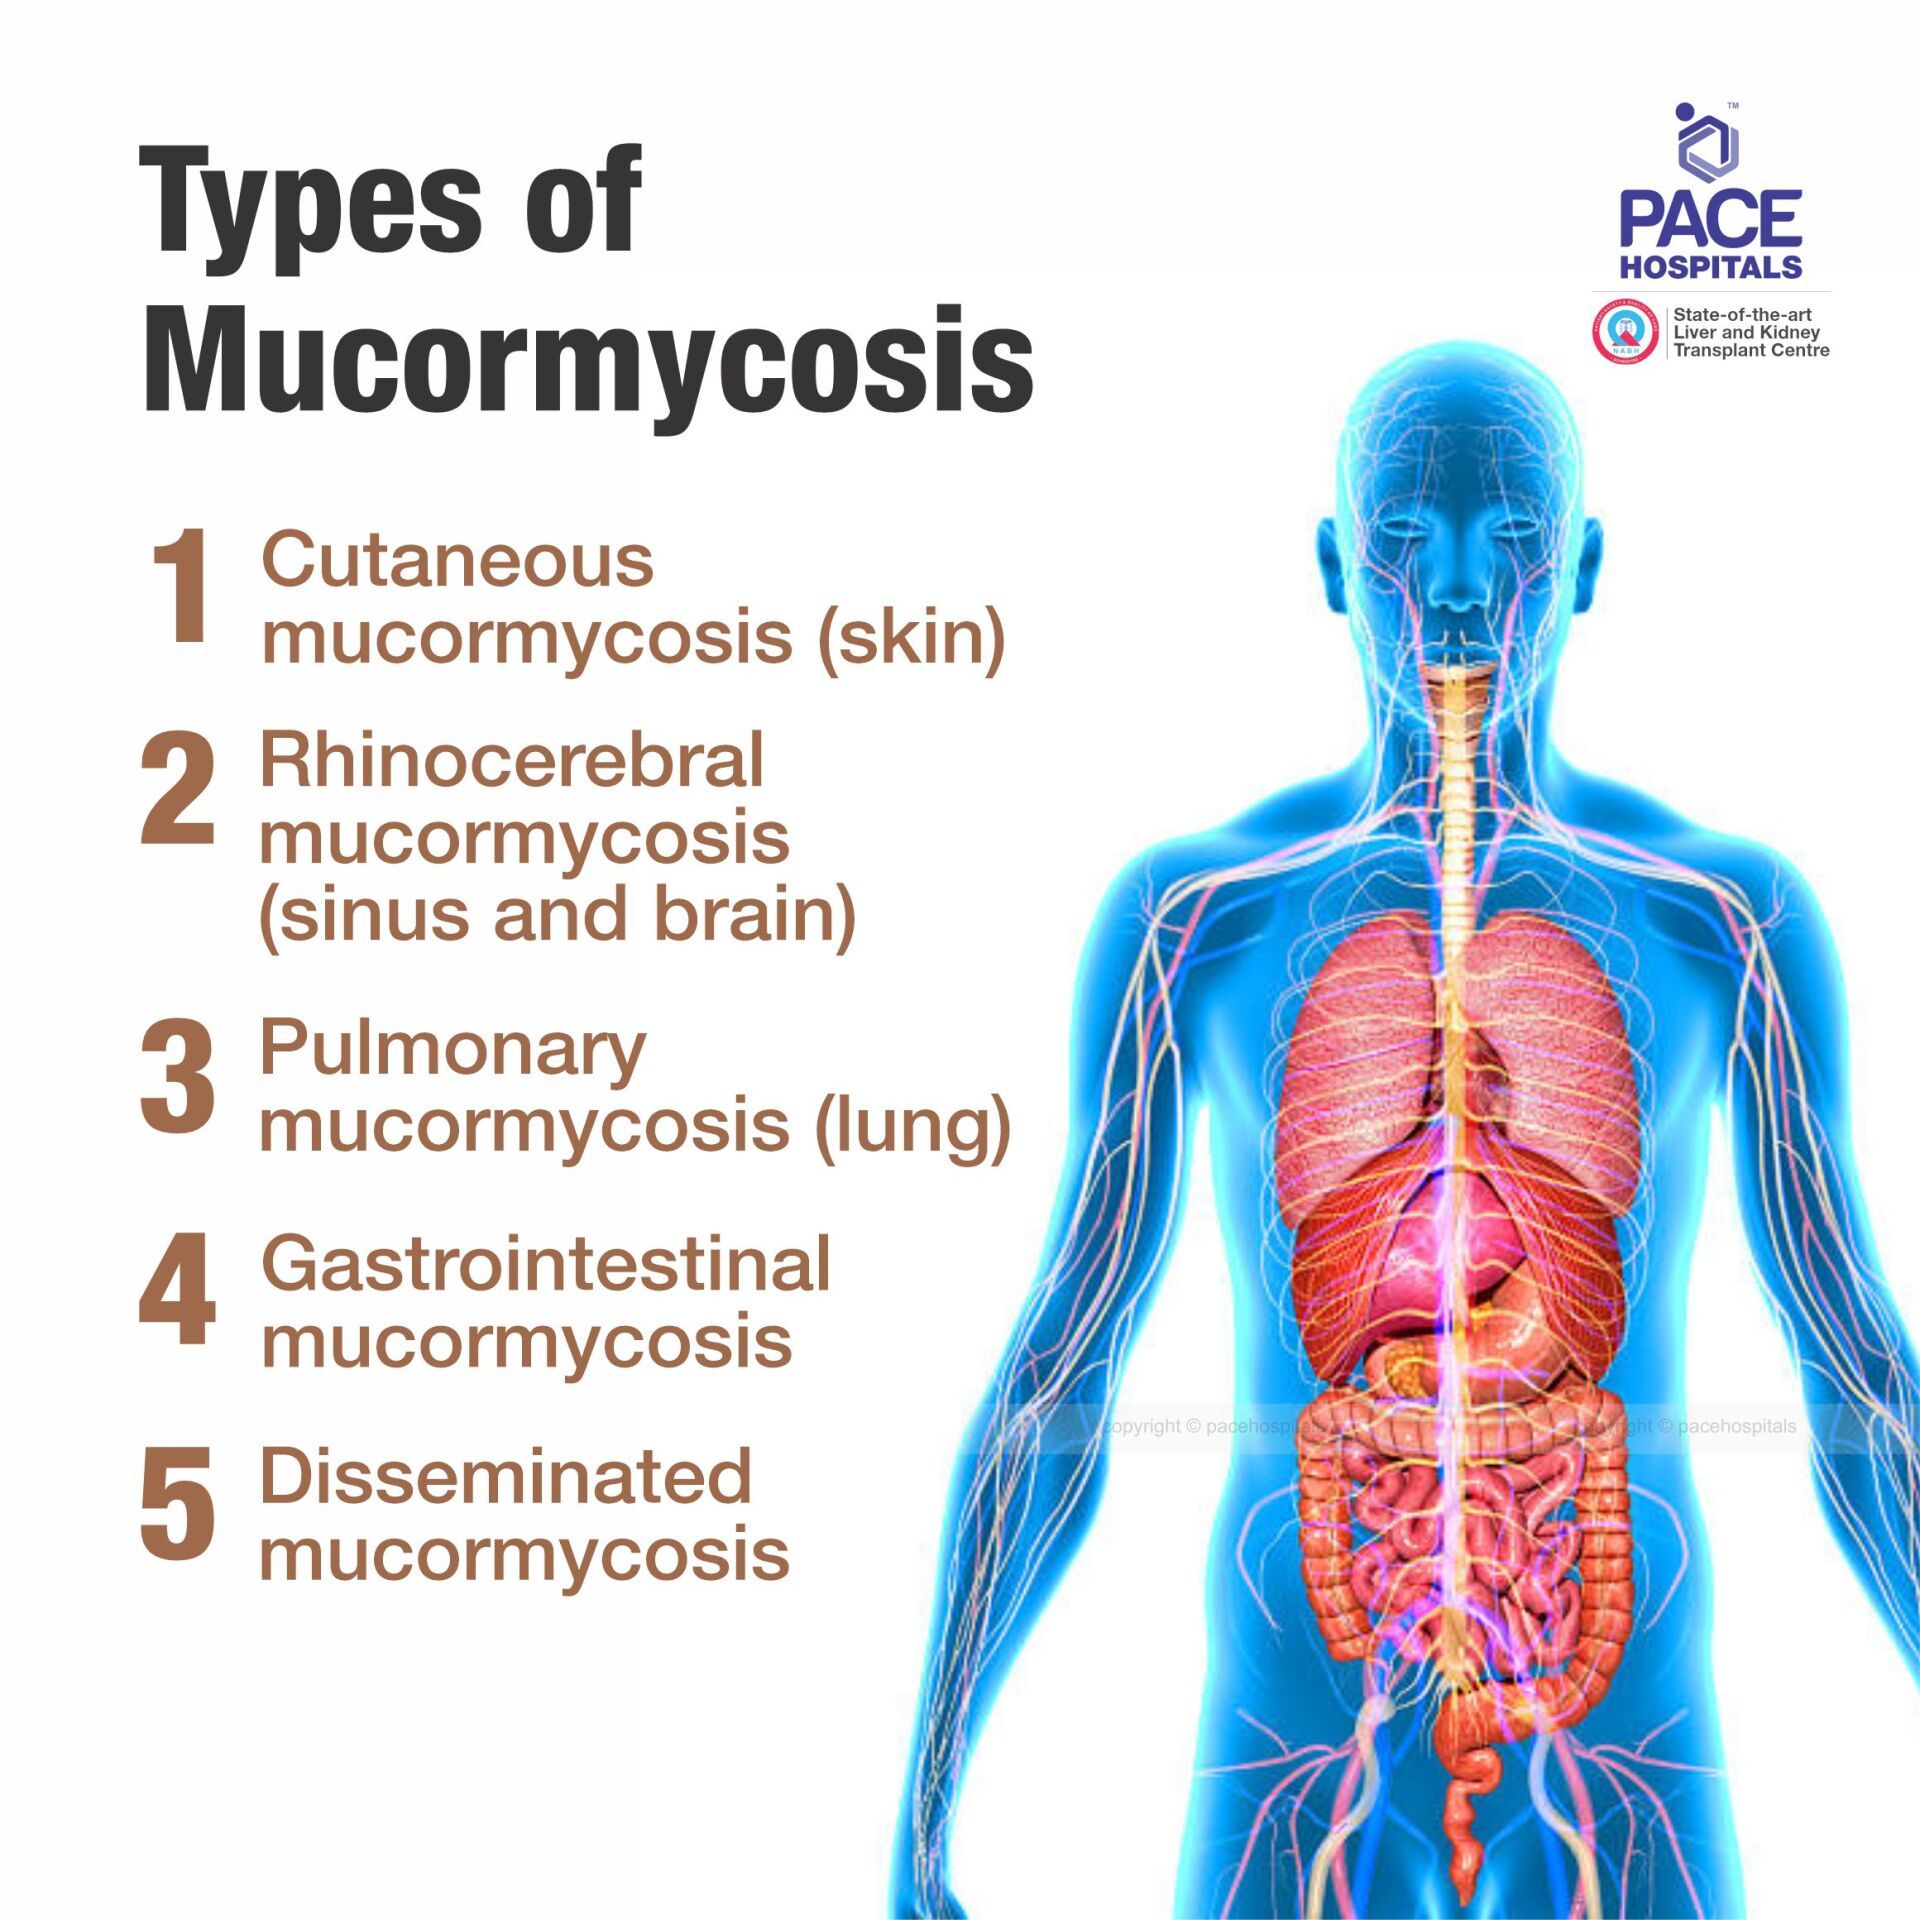 Types of Mucormycosis - Pulmonary mucormycosis (lung), Rhinocerebral mucormycosis (sinus and brain), Cutaneous mucormycosis (skin), Gastrointestinal mucormycosis, Disseminated mucormycosis